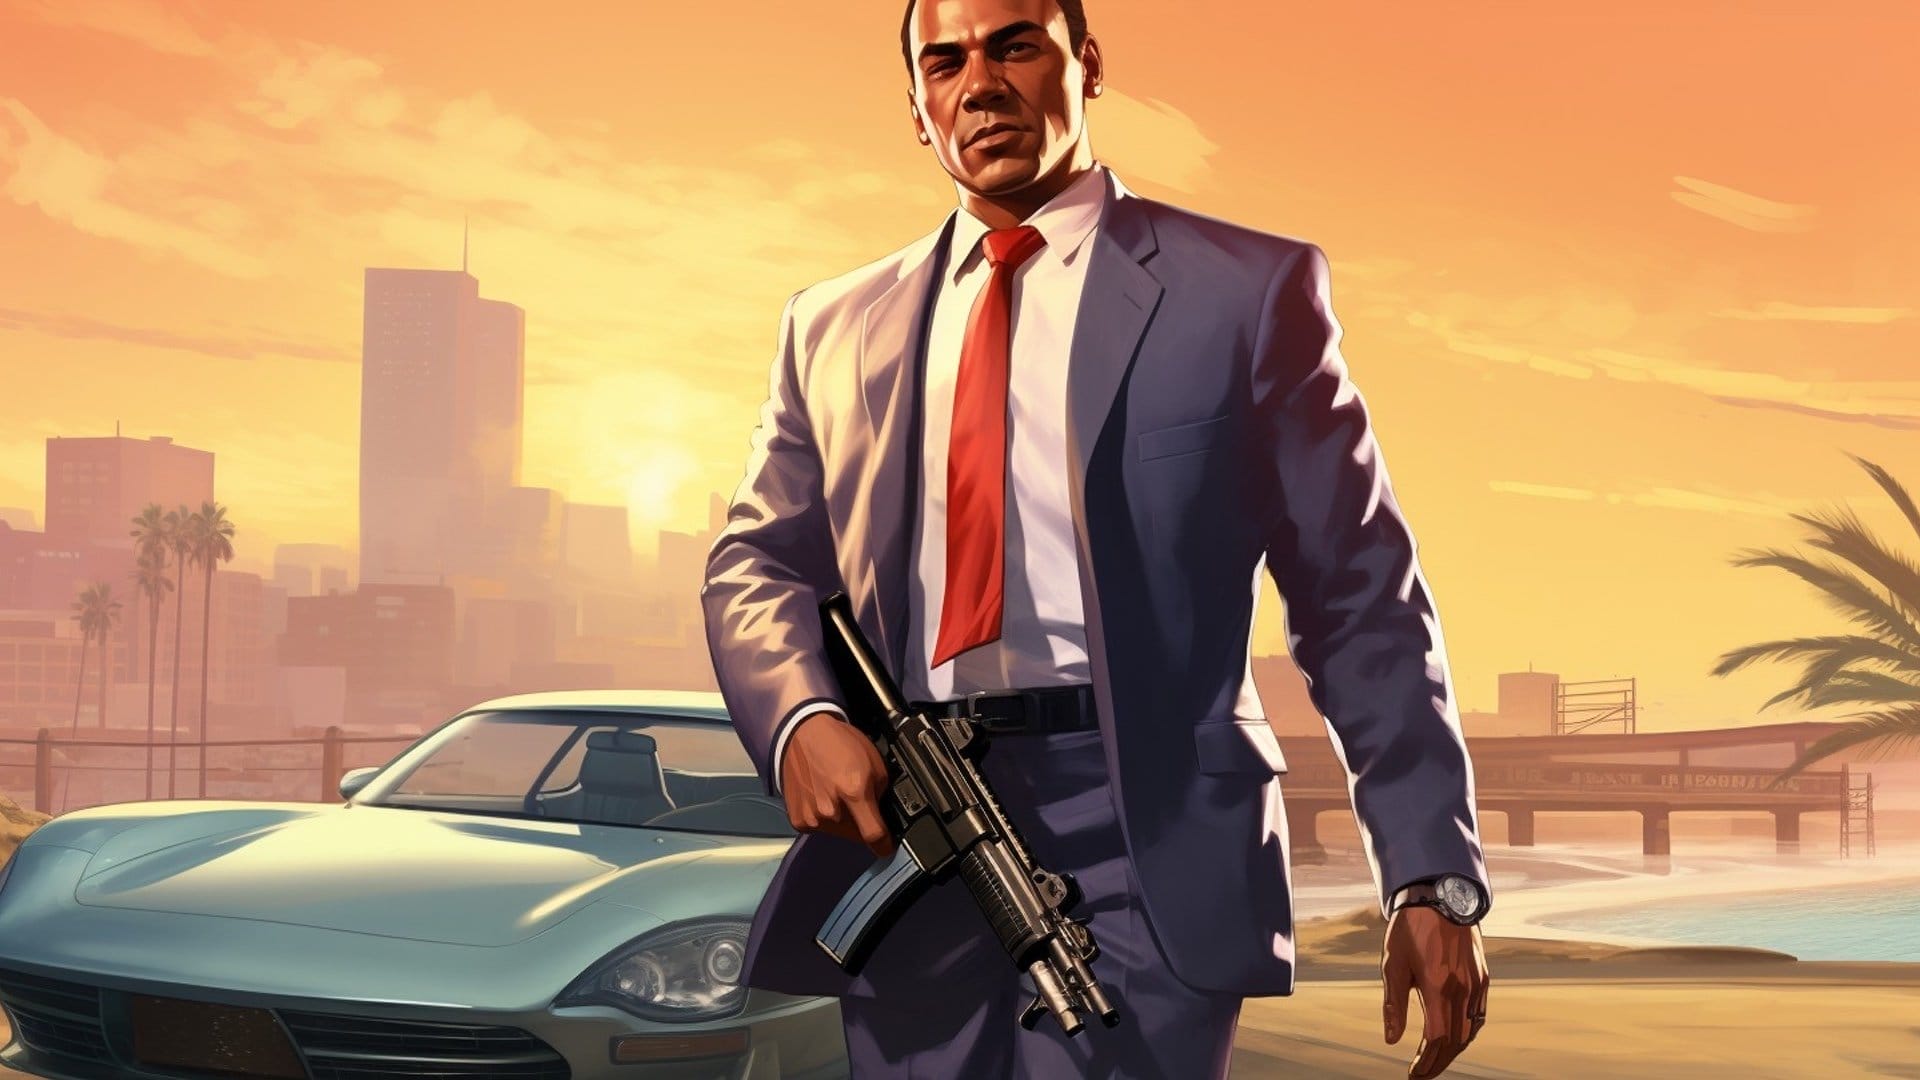 Grand Theft Auto: Vice City - Anniversary Trailer 